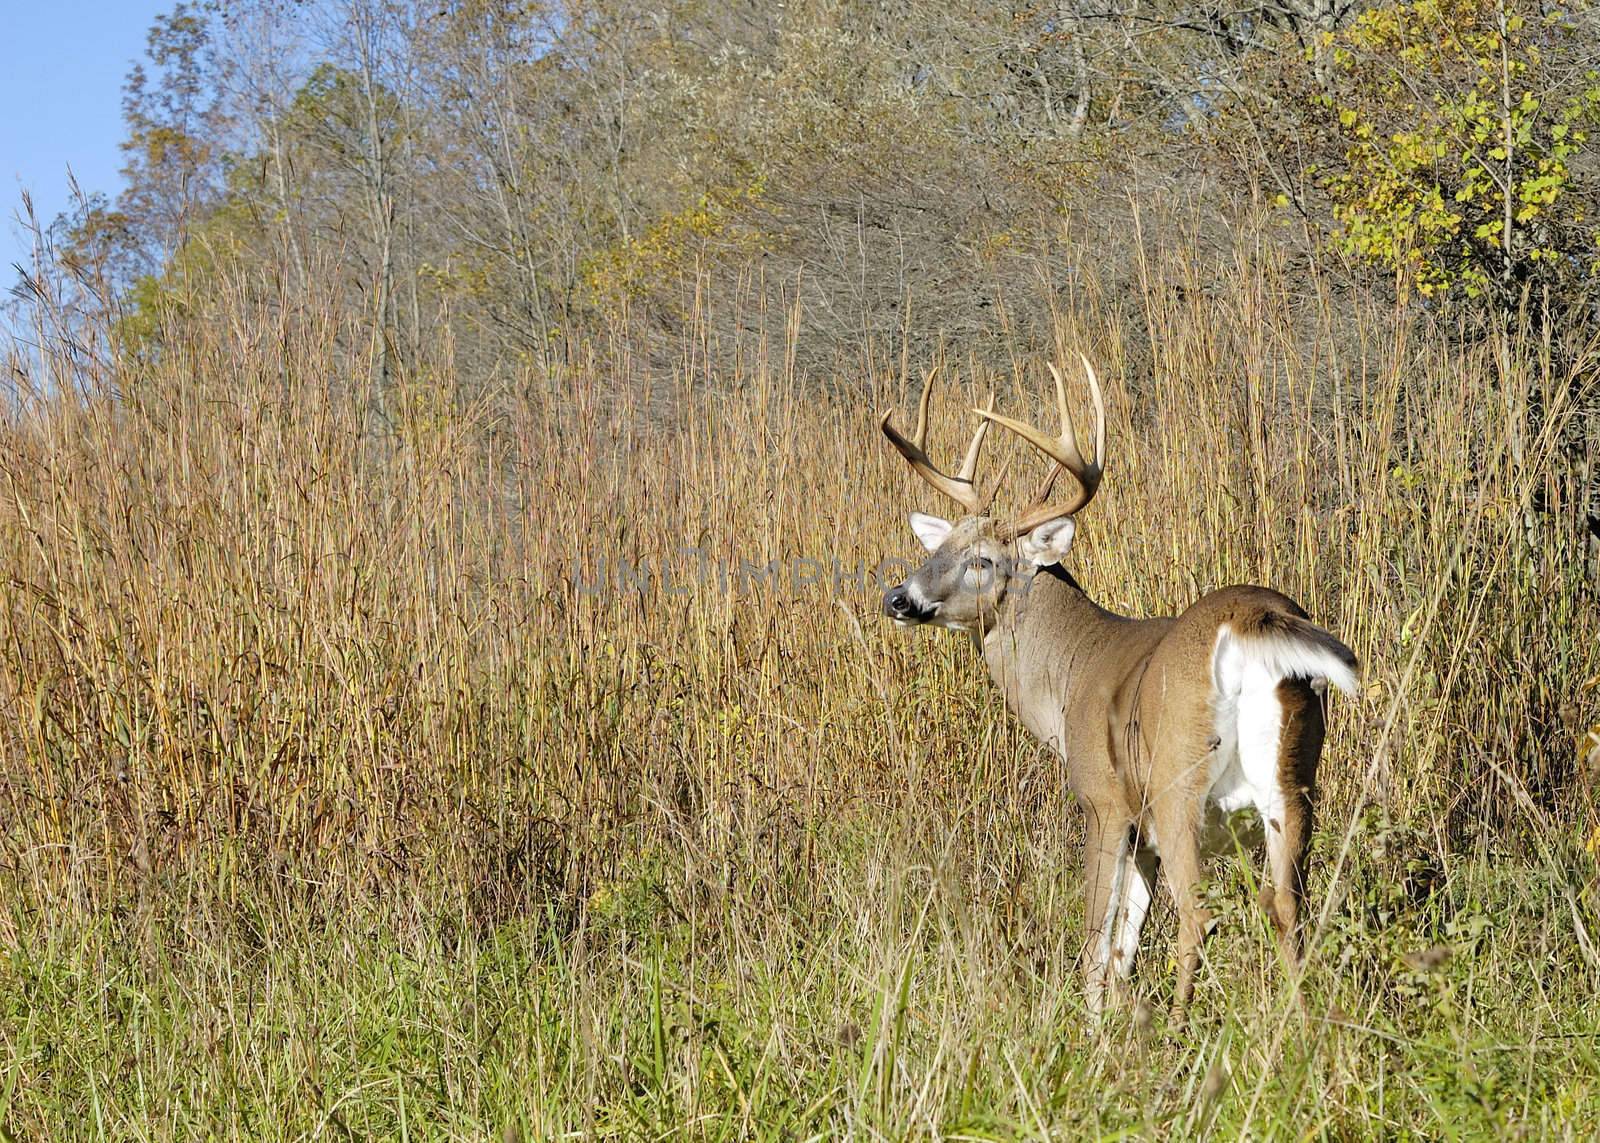 A whitetail deer buck standing in a field.